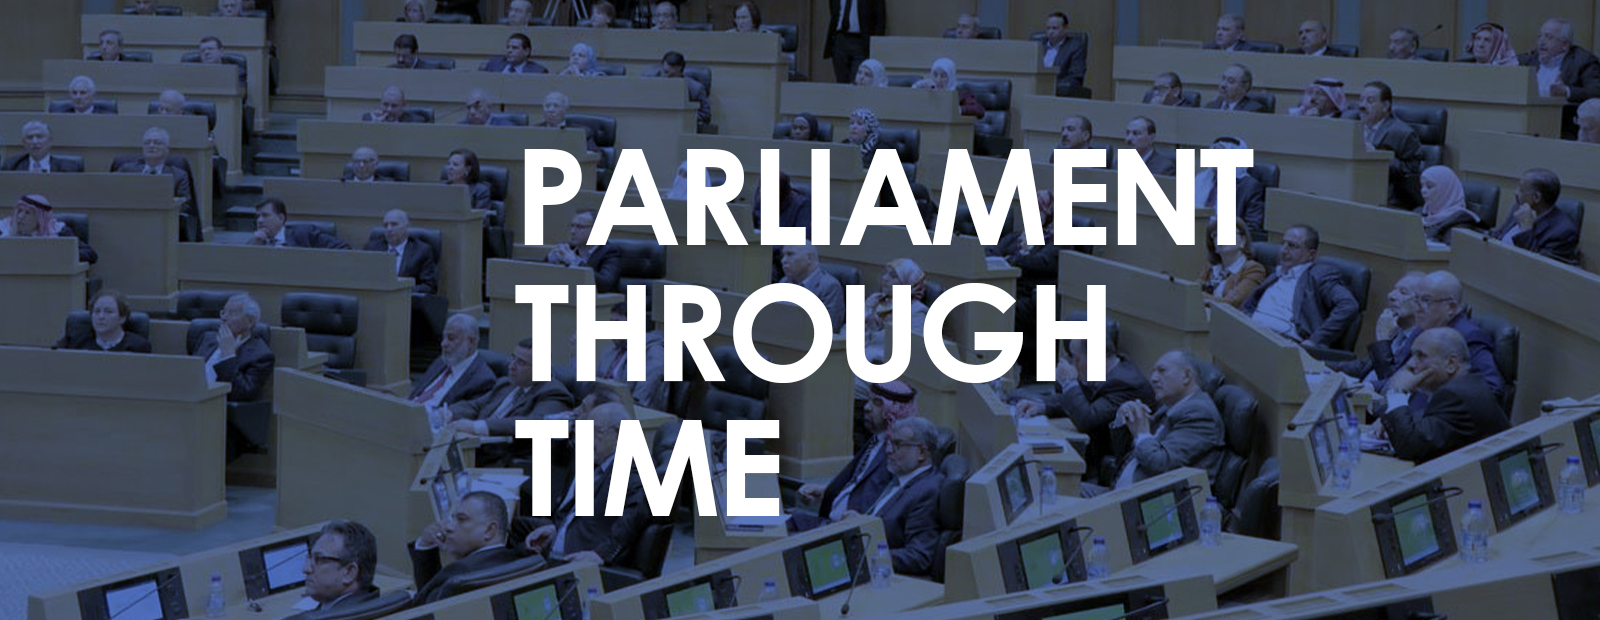 Parliament through time 